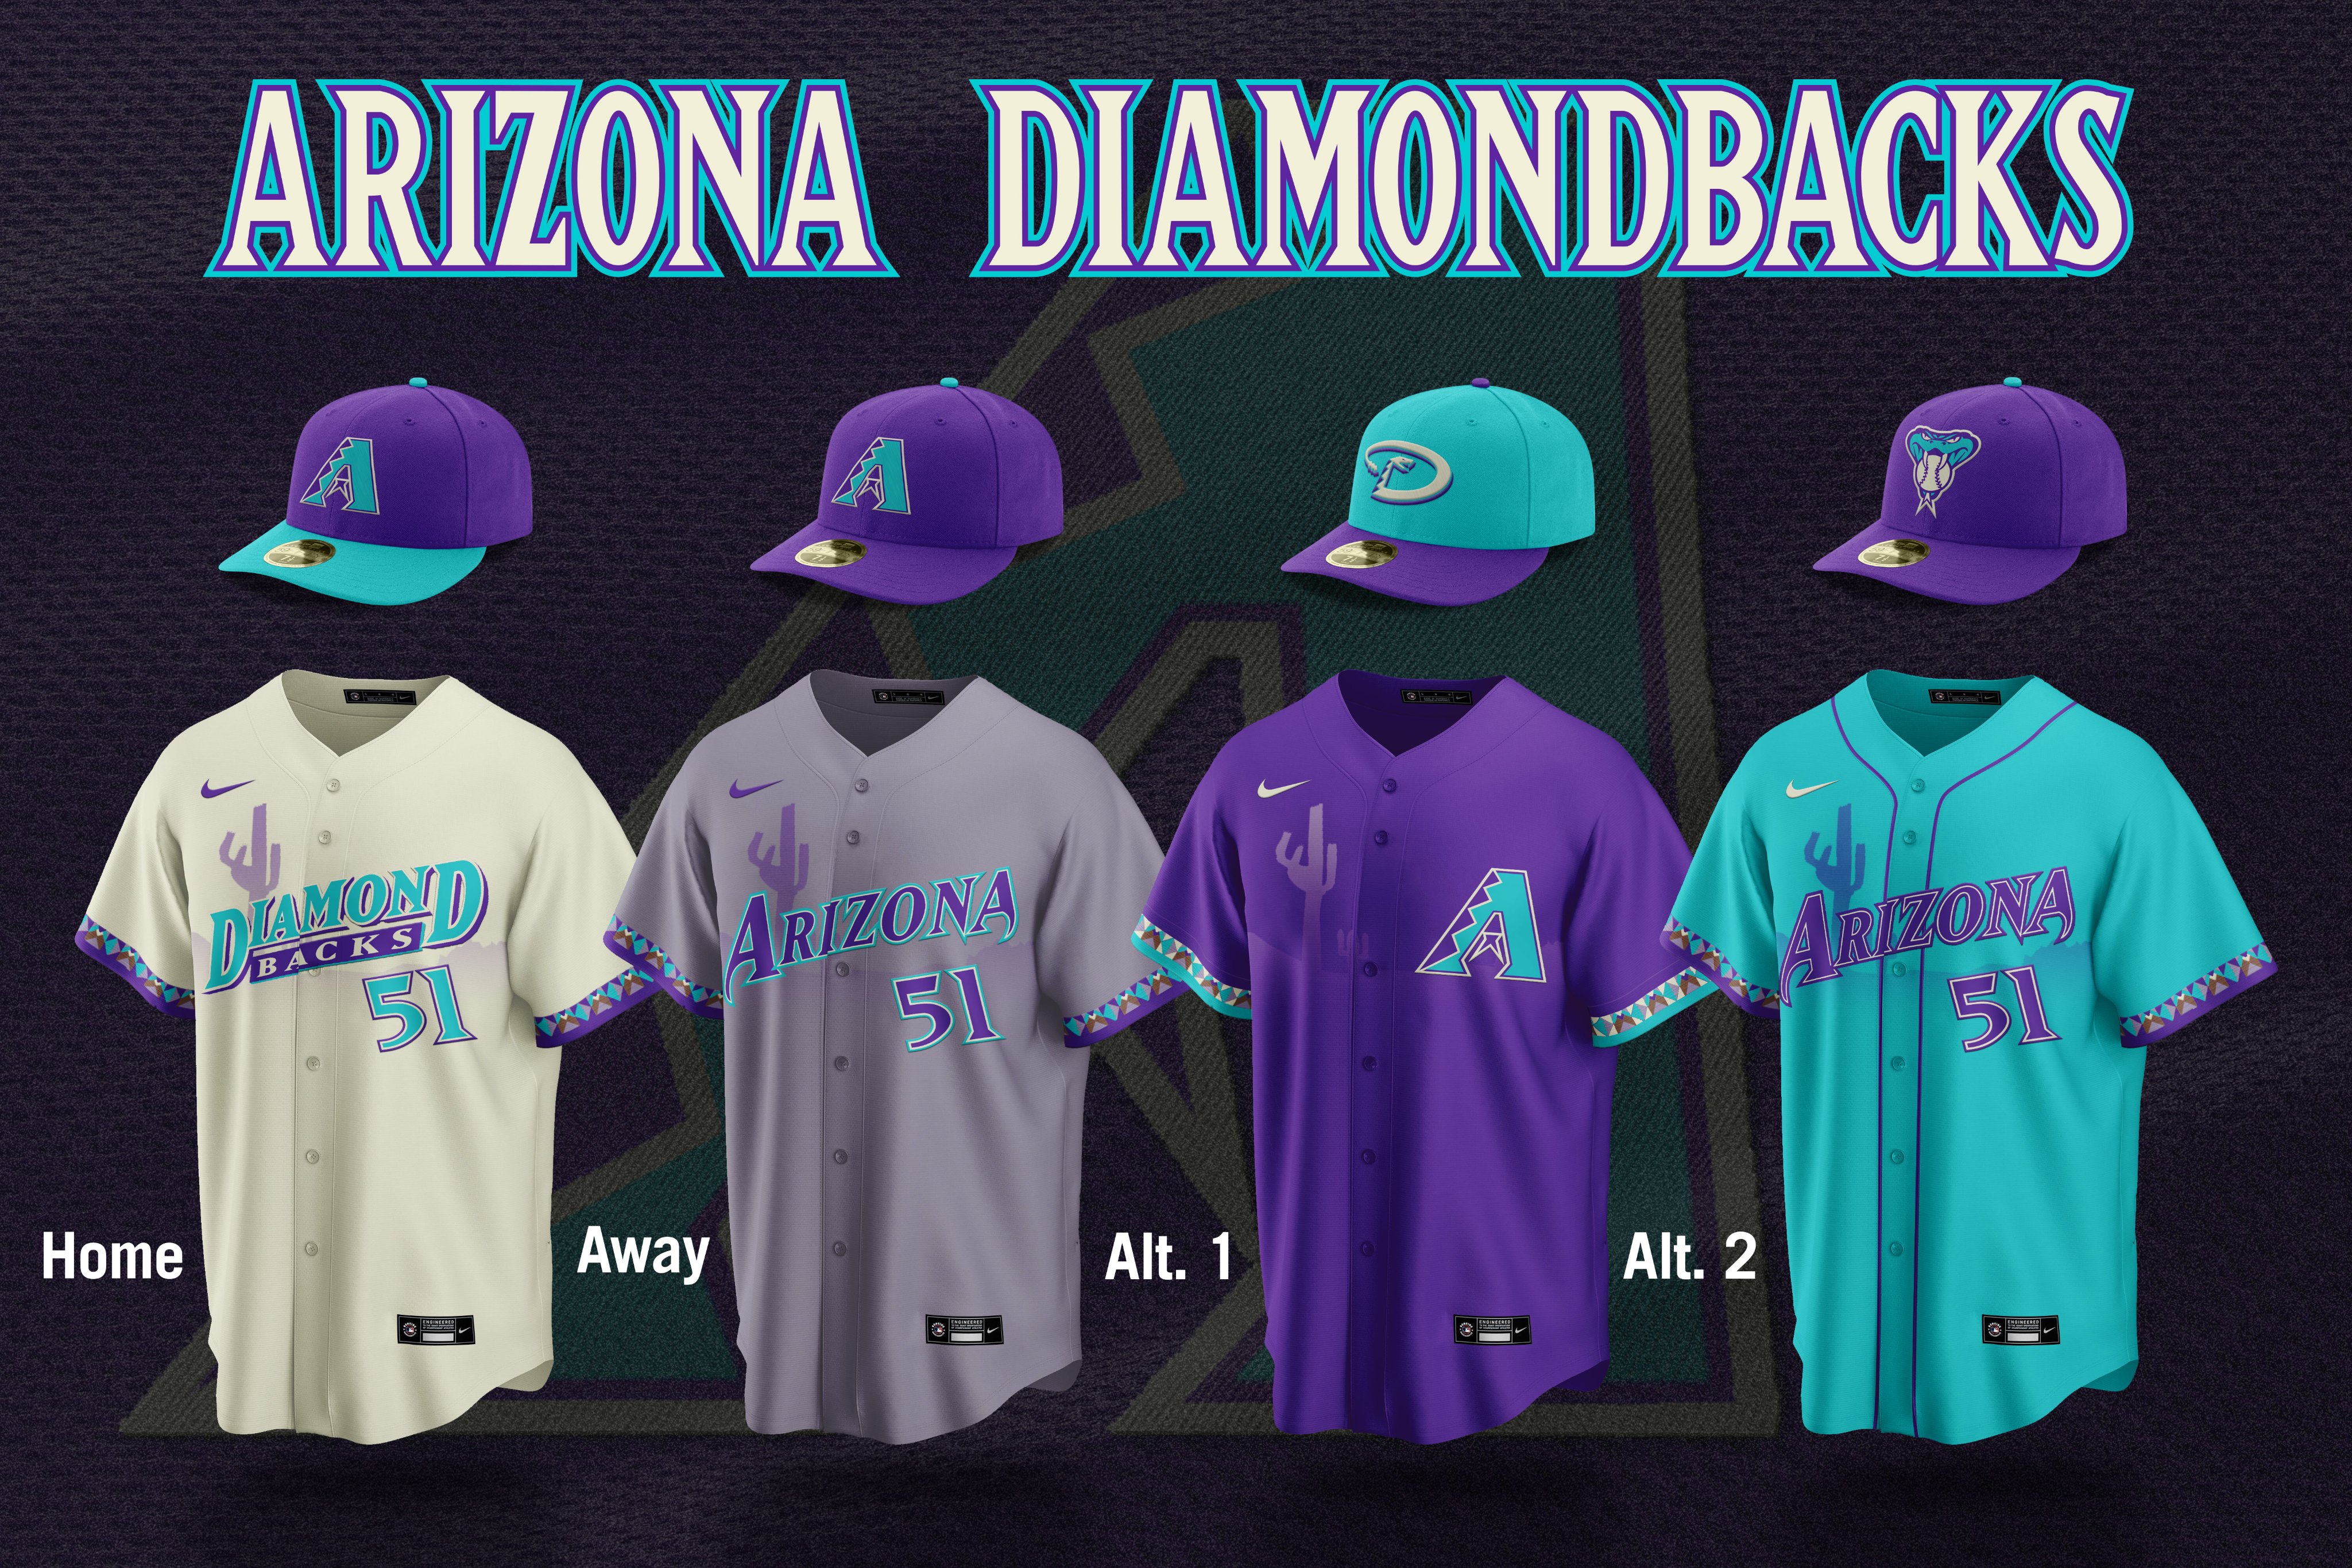 Arizona Diamondbacks should return to the purple and teal uniforms - VAVEL  USA